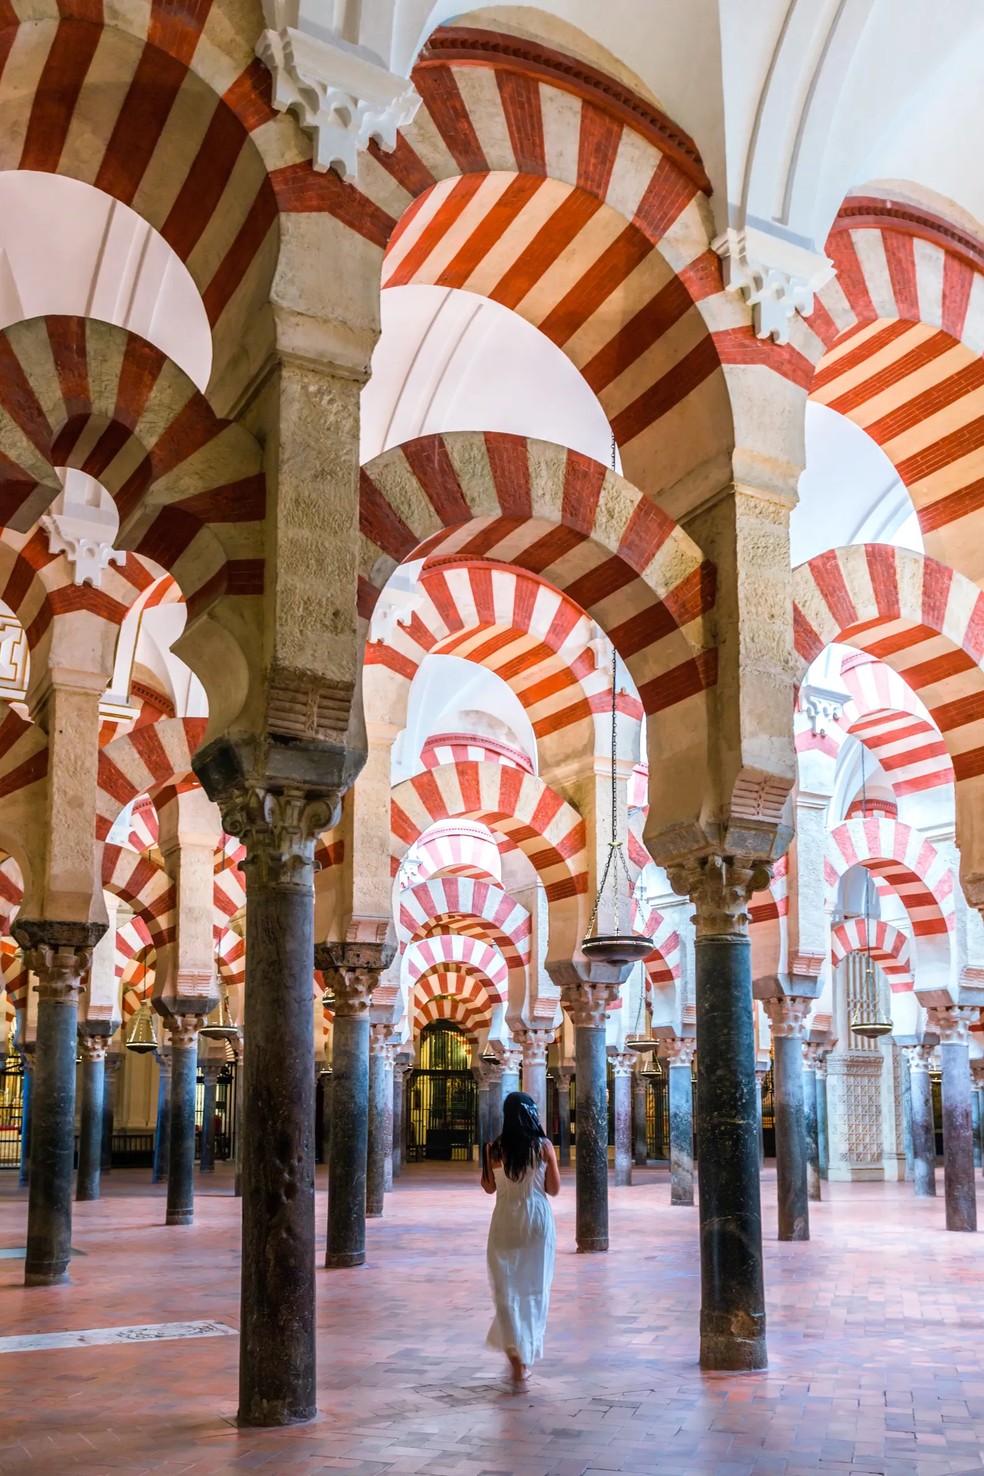 Córdoba, na Espanha — Foto: Getty Images